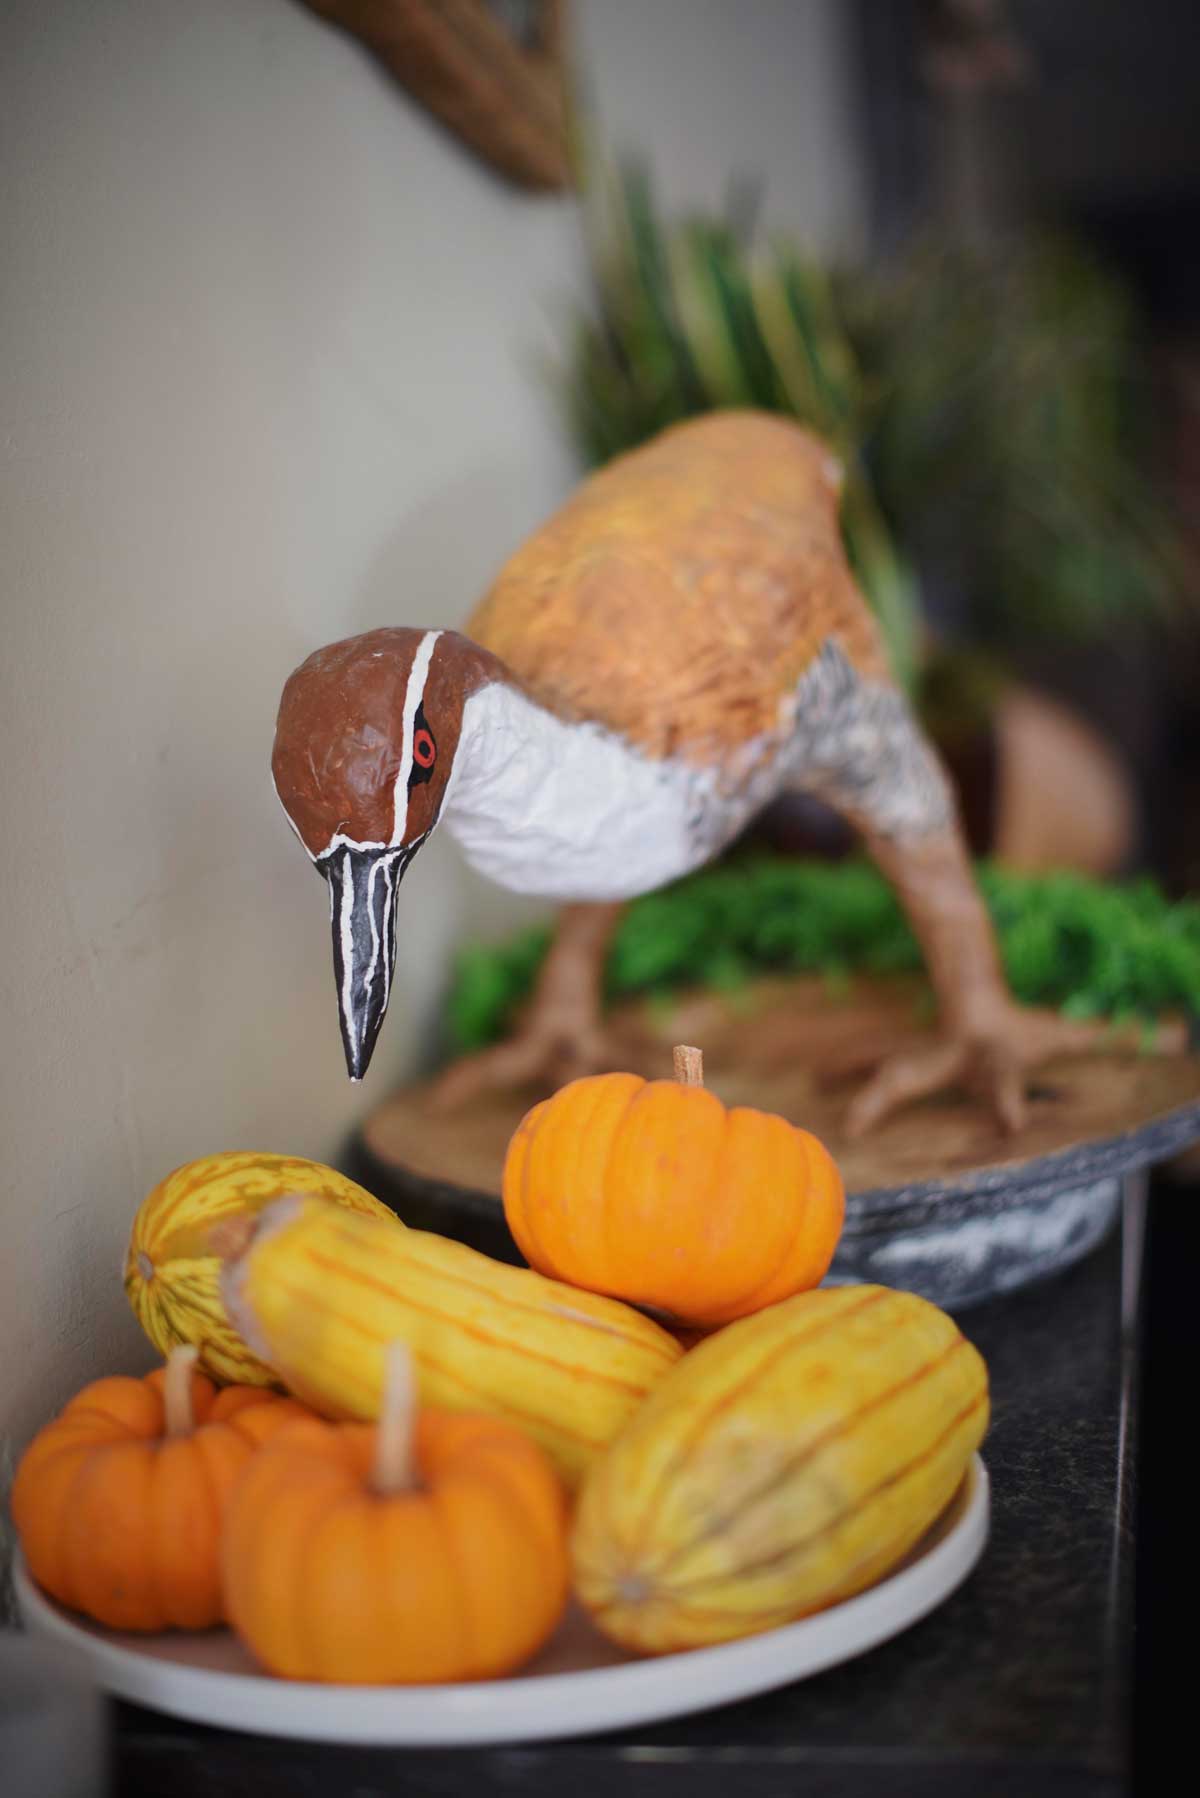 A tropical bird considers enjoying some mini pumpkins.